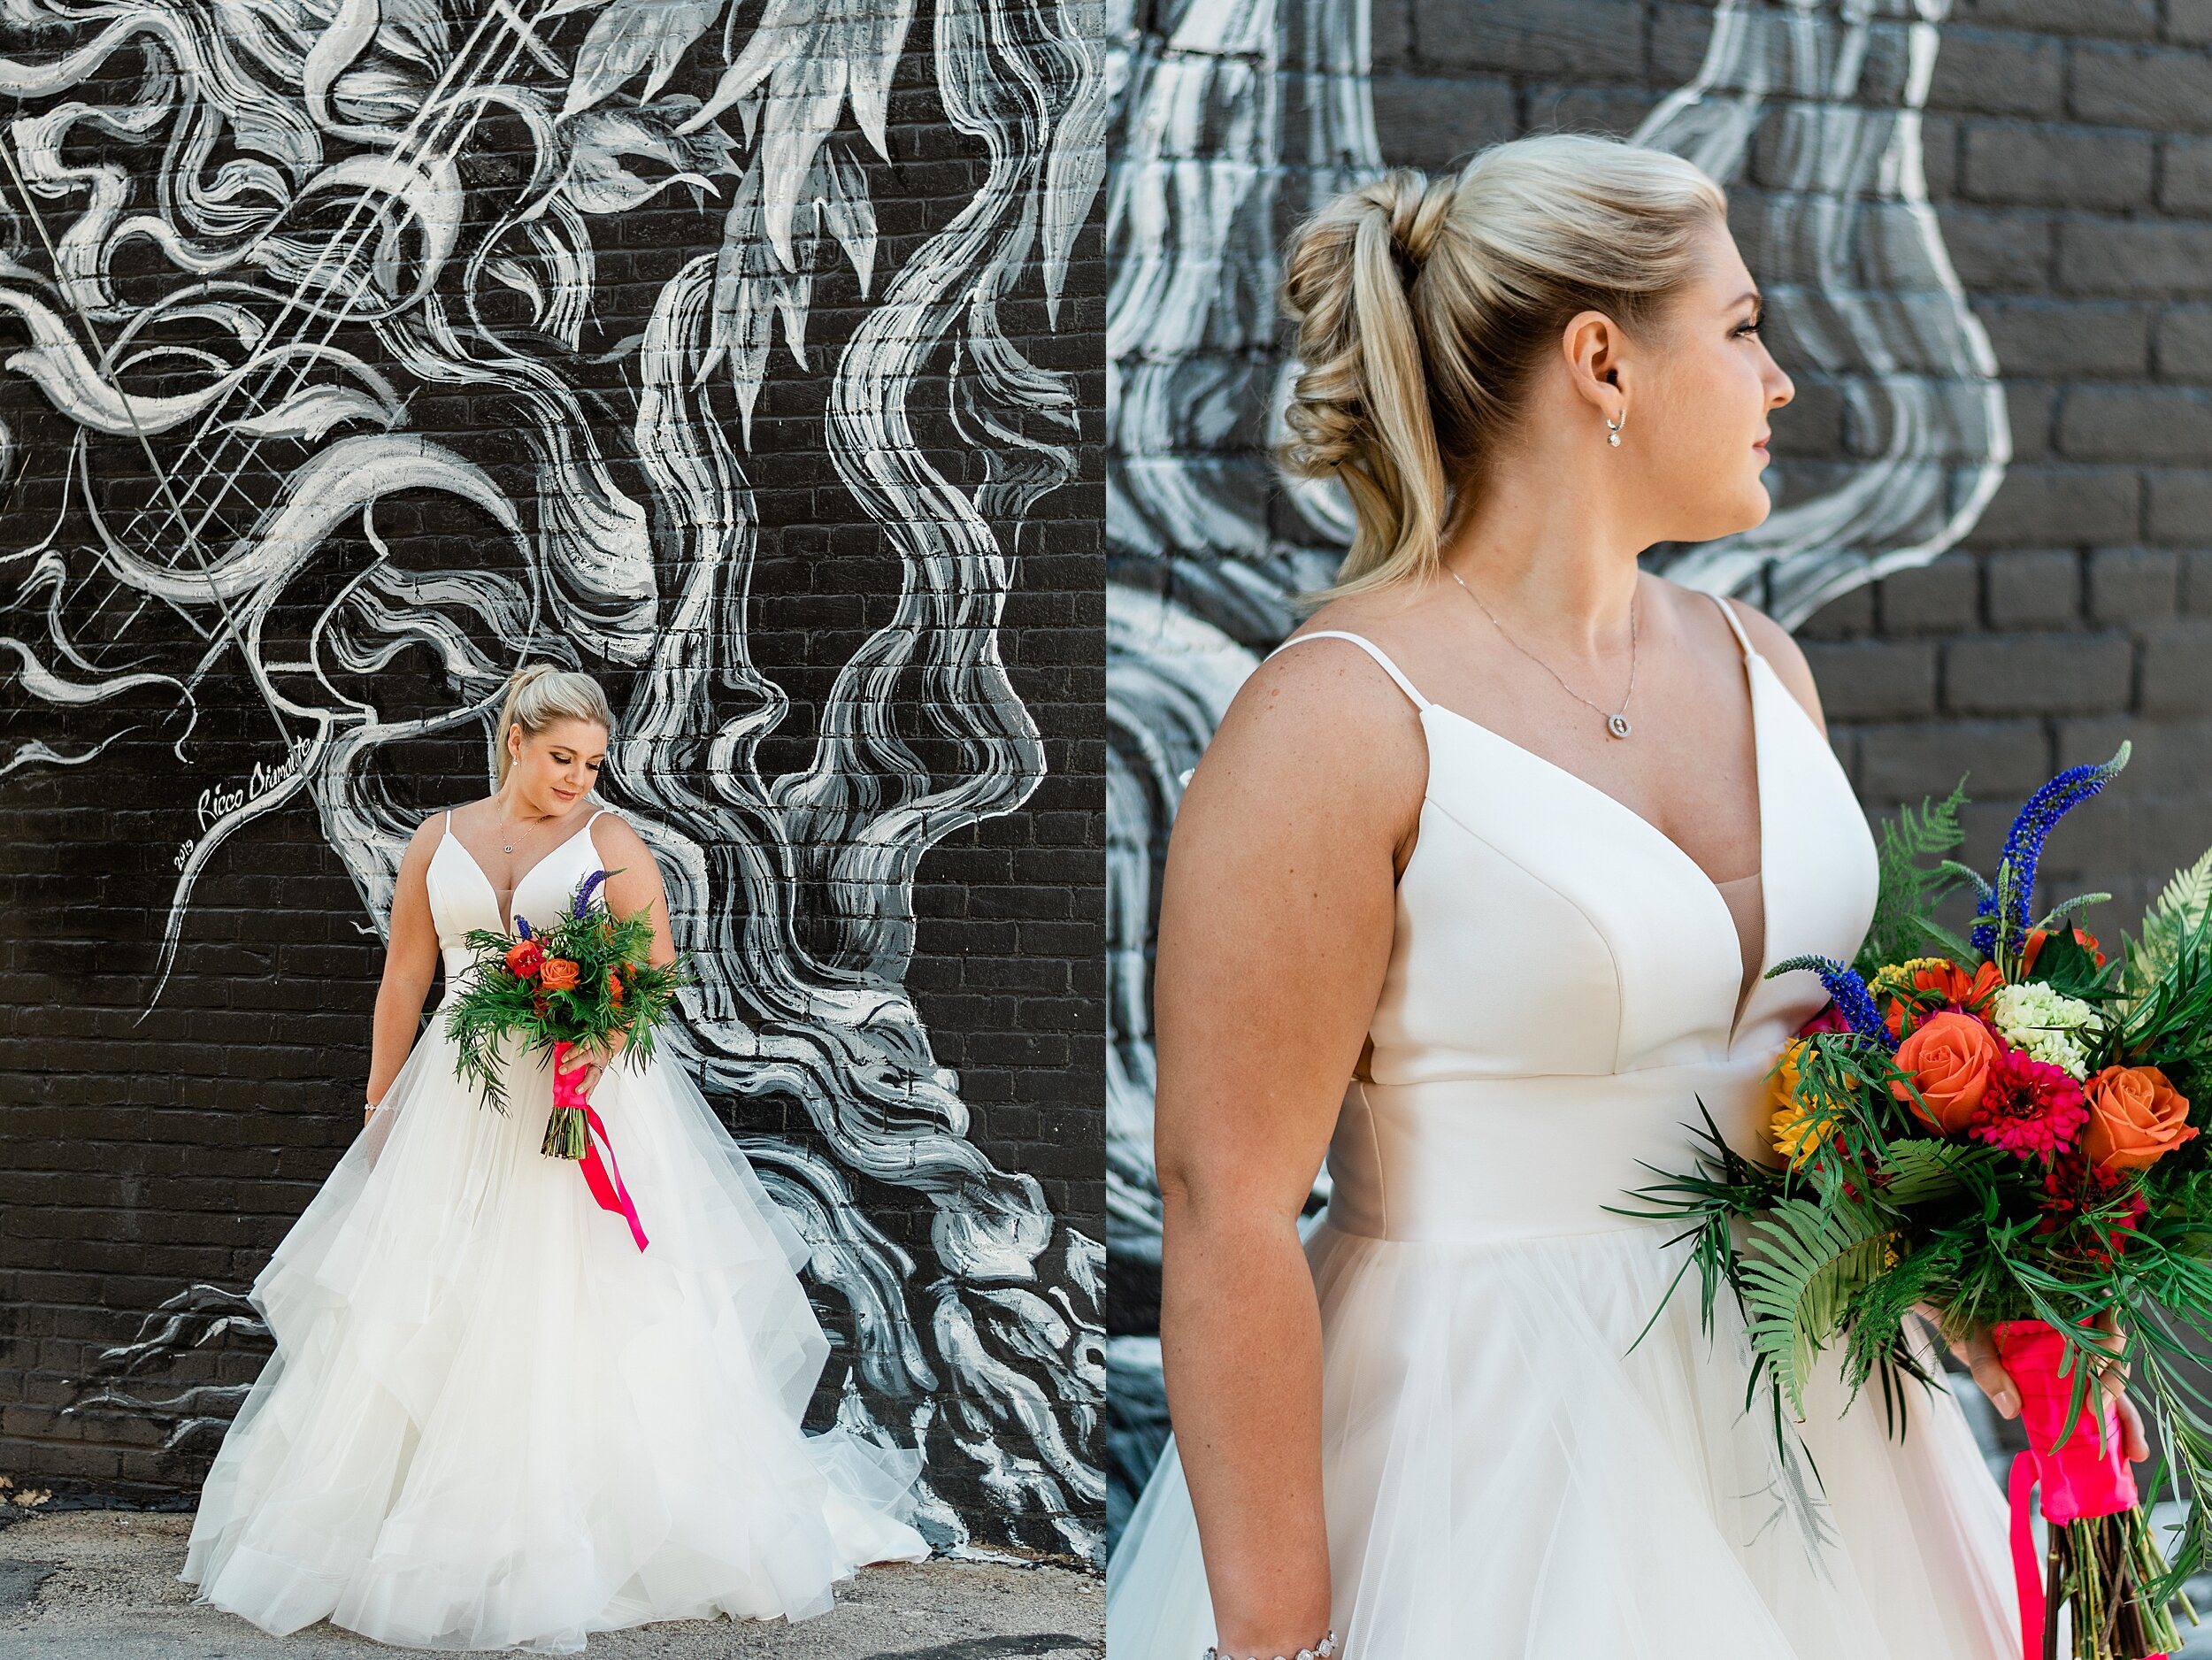 sisters-bridal-boutique-laudicks-jewelry-betsys-bouquets-van-wert-ohio-wedding-photographer-the-association-photography_6900.jpg